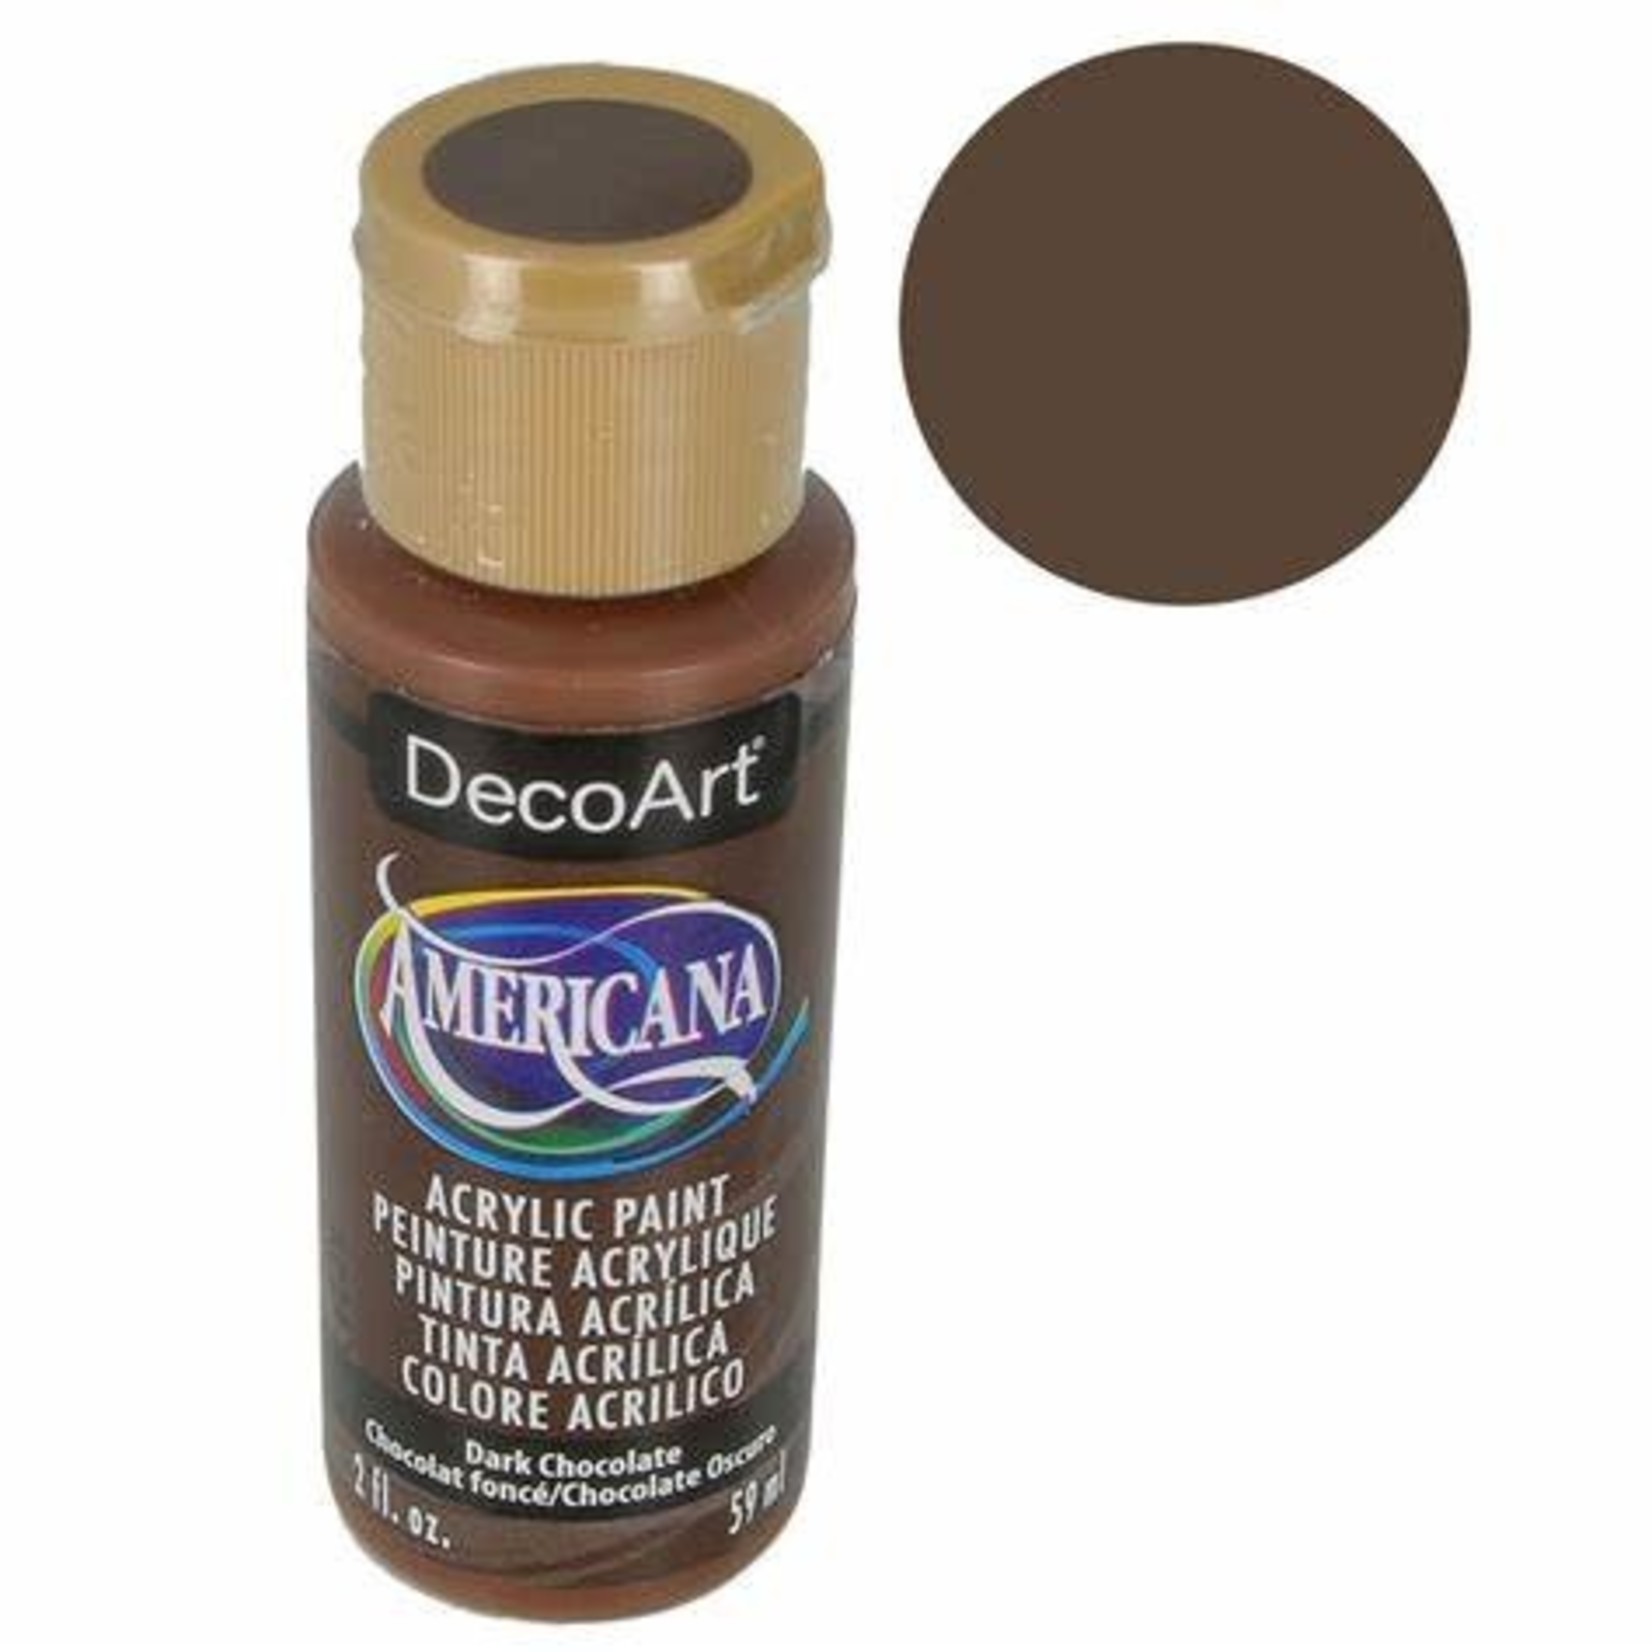 DecoArt Americana - Acrylic Paint - Dark Chocolate